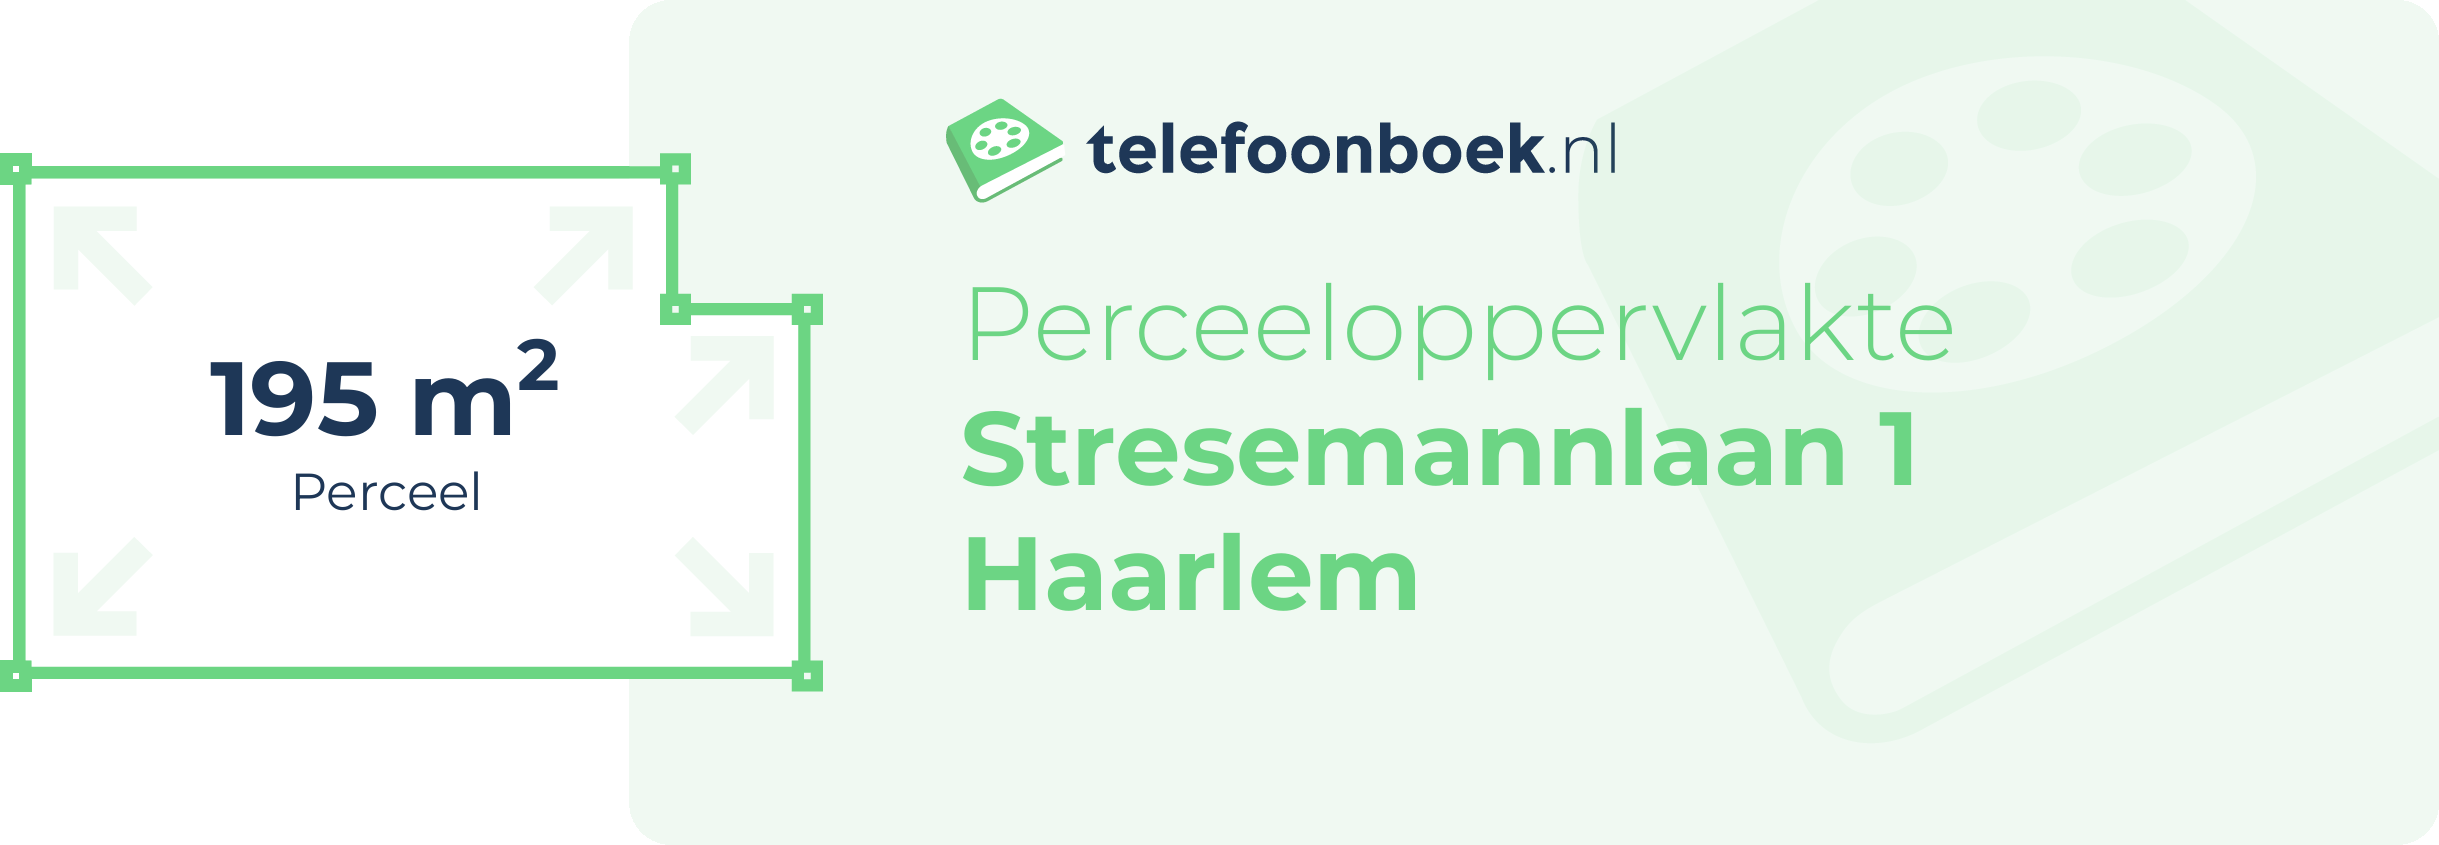 Perceeloppervlakte Stresemannlaan 1 Haarlem